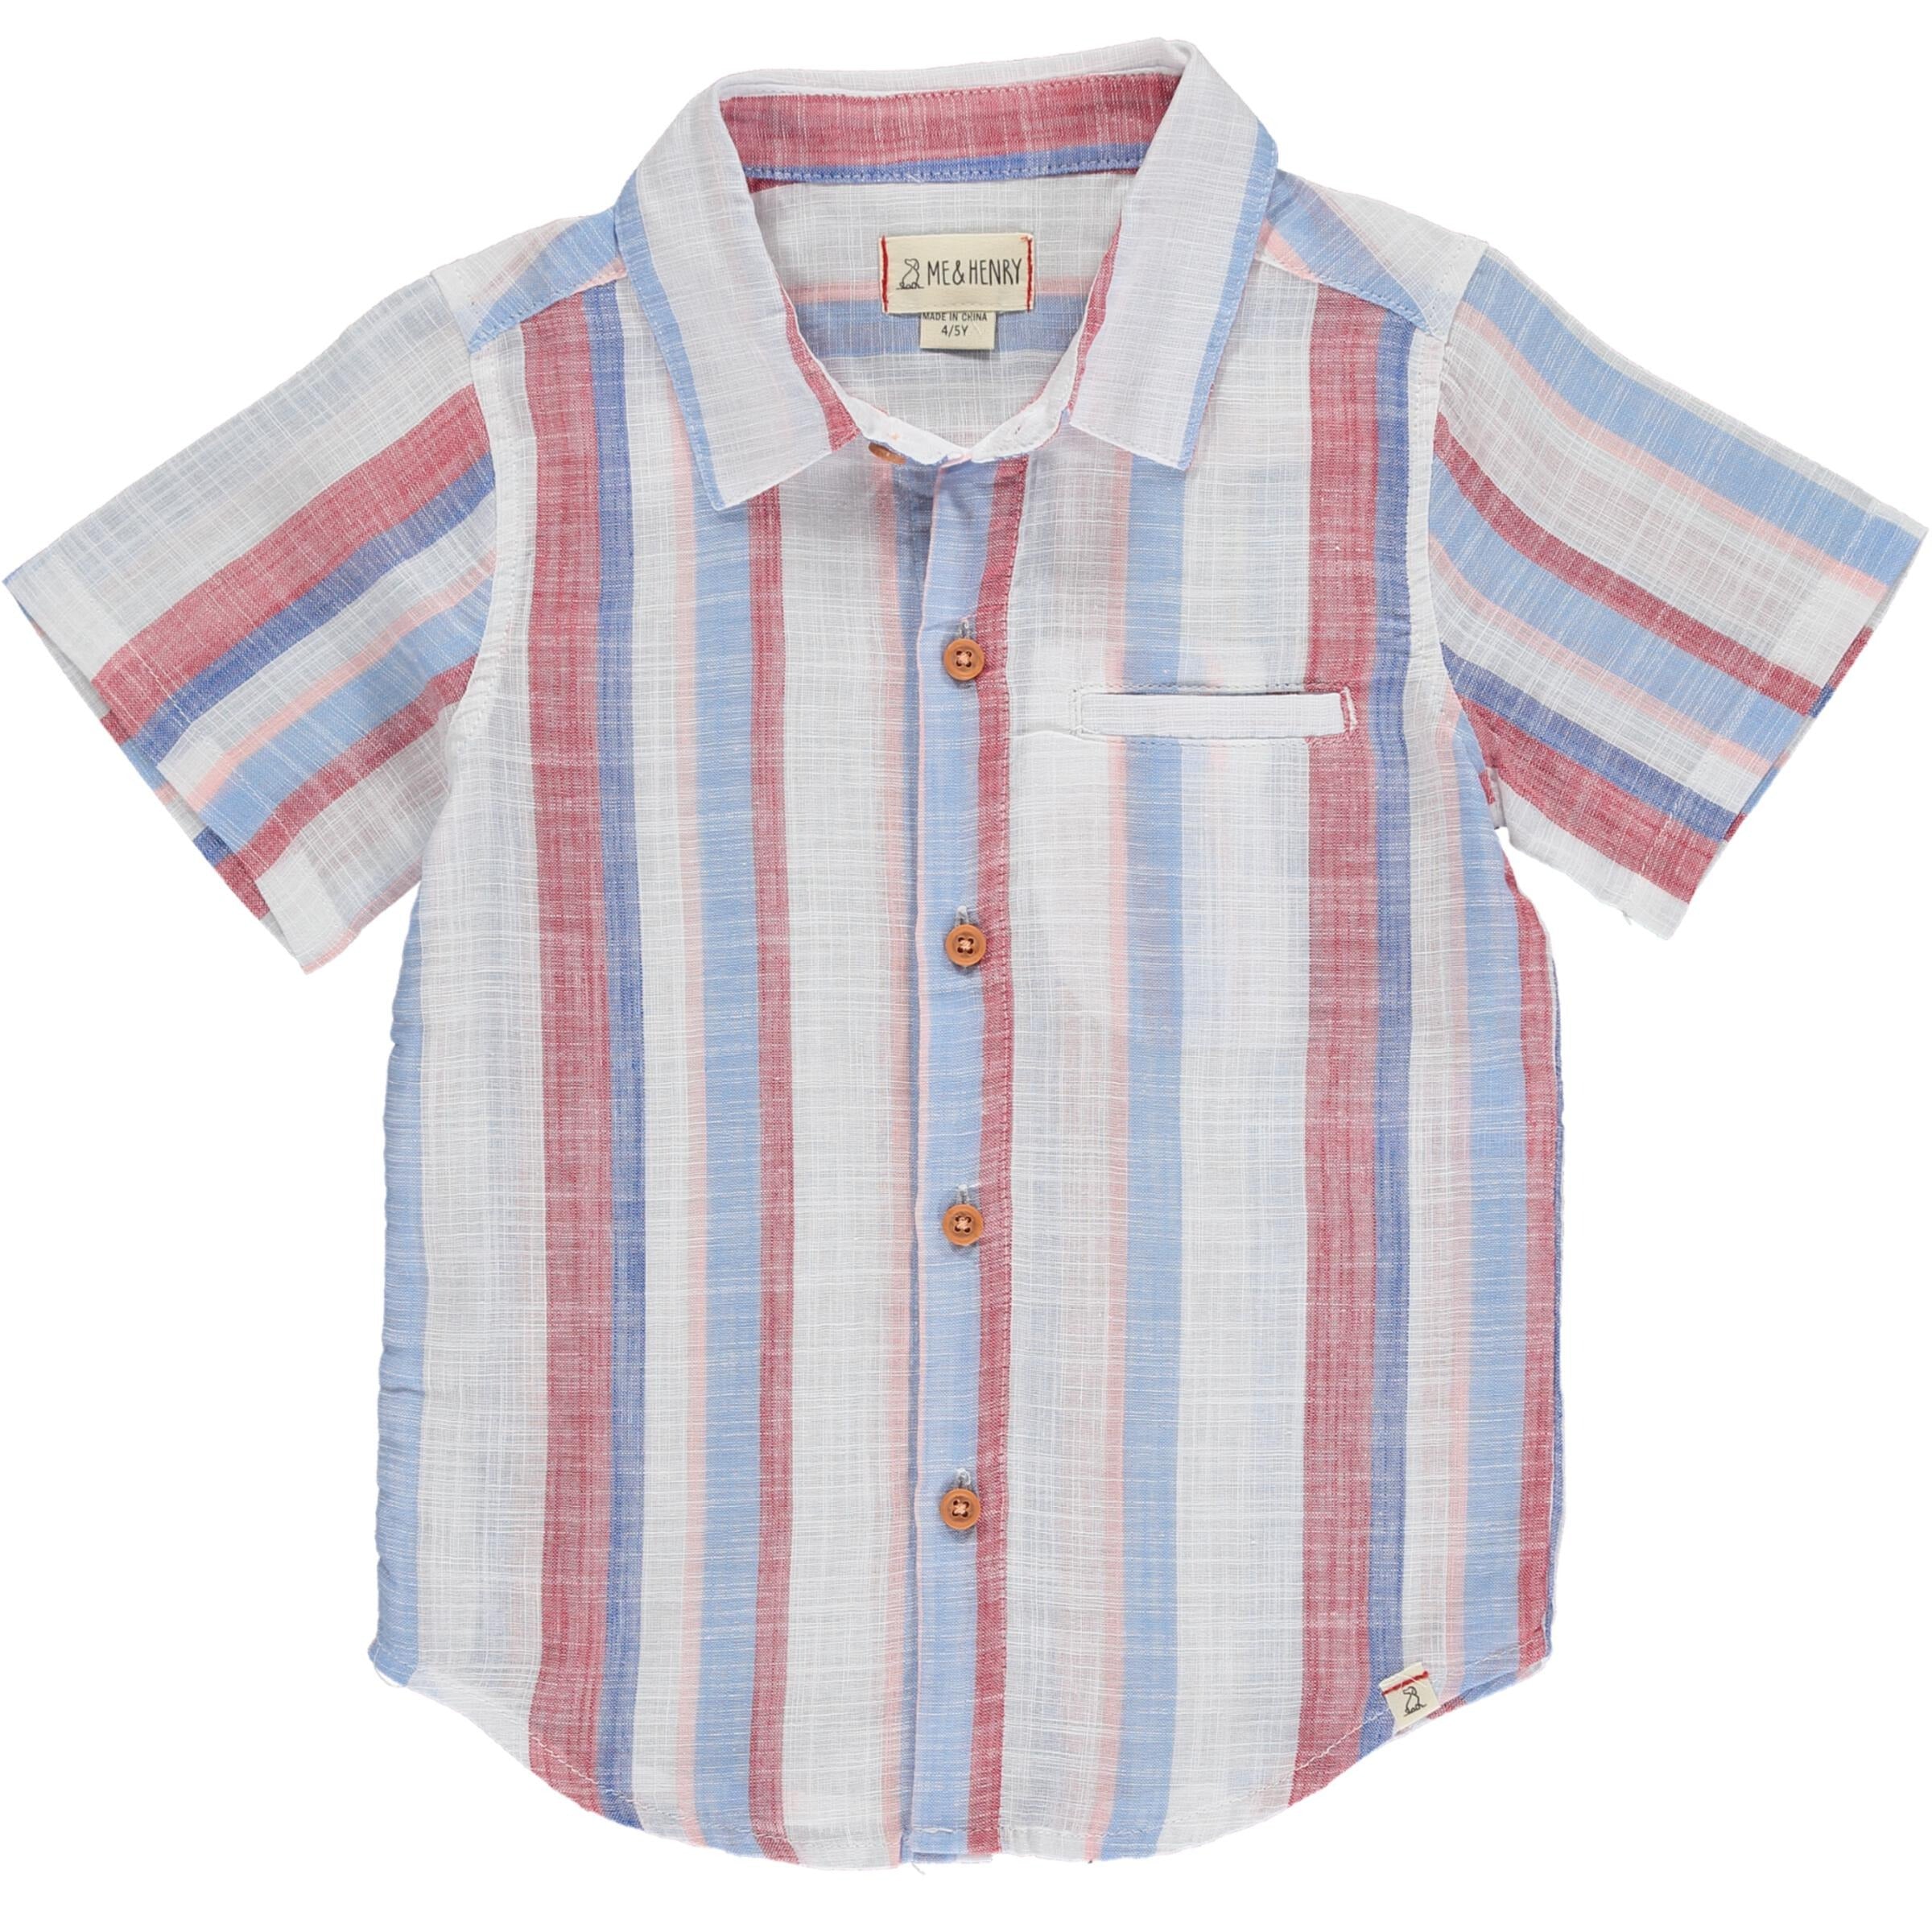 Maui Shirt - Red/White/Blue Stripe